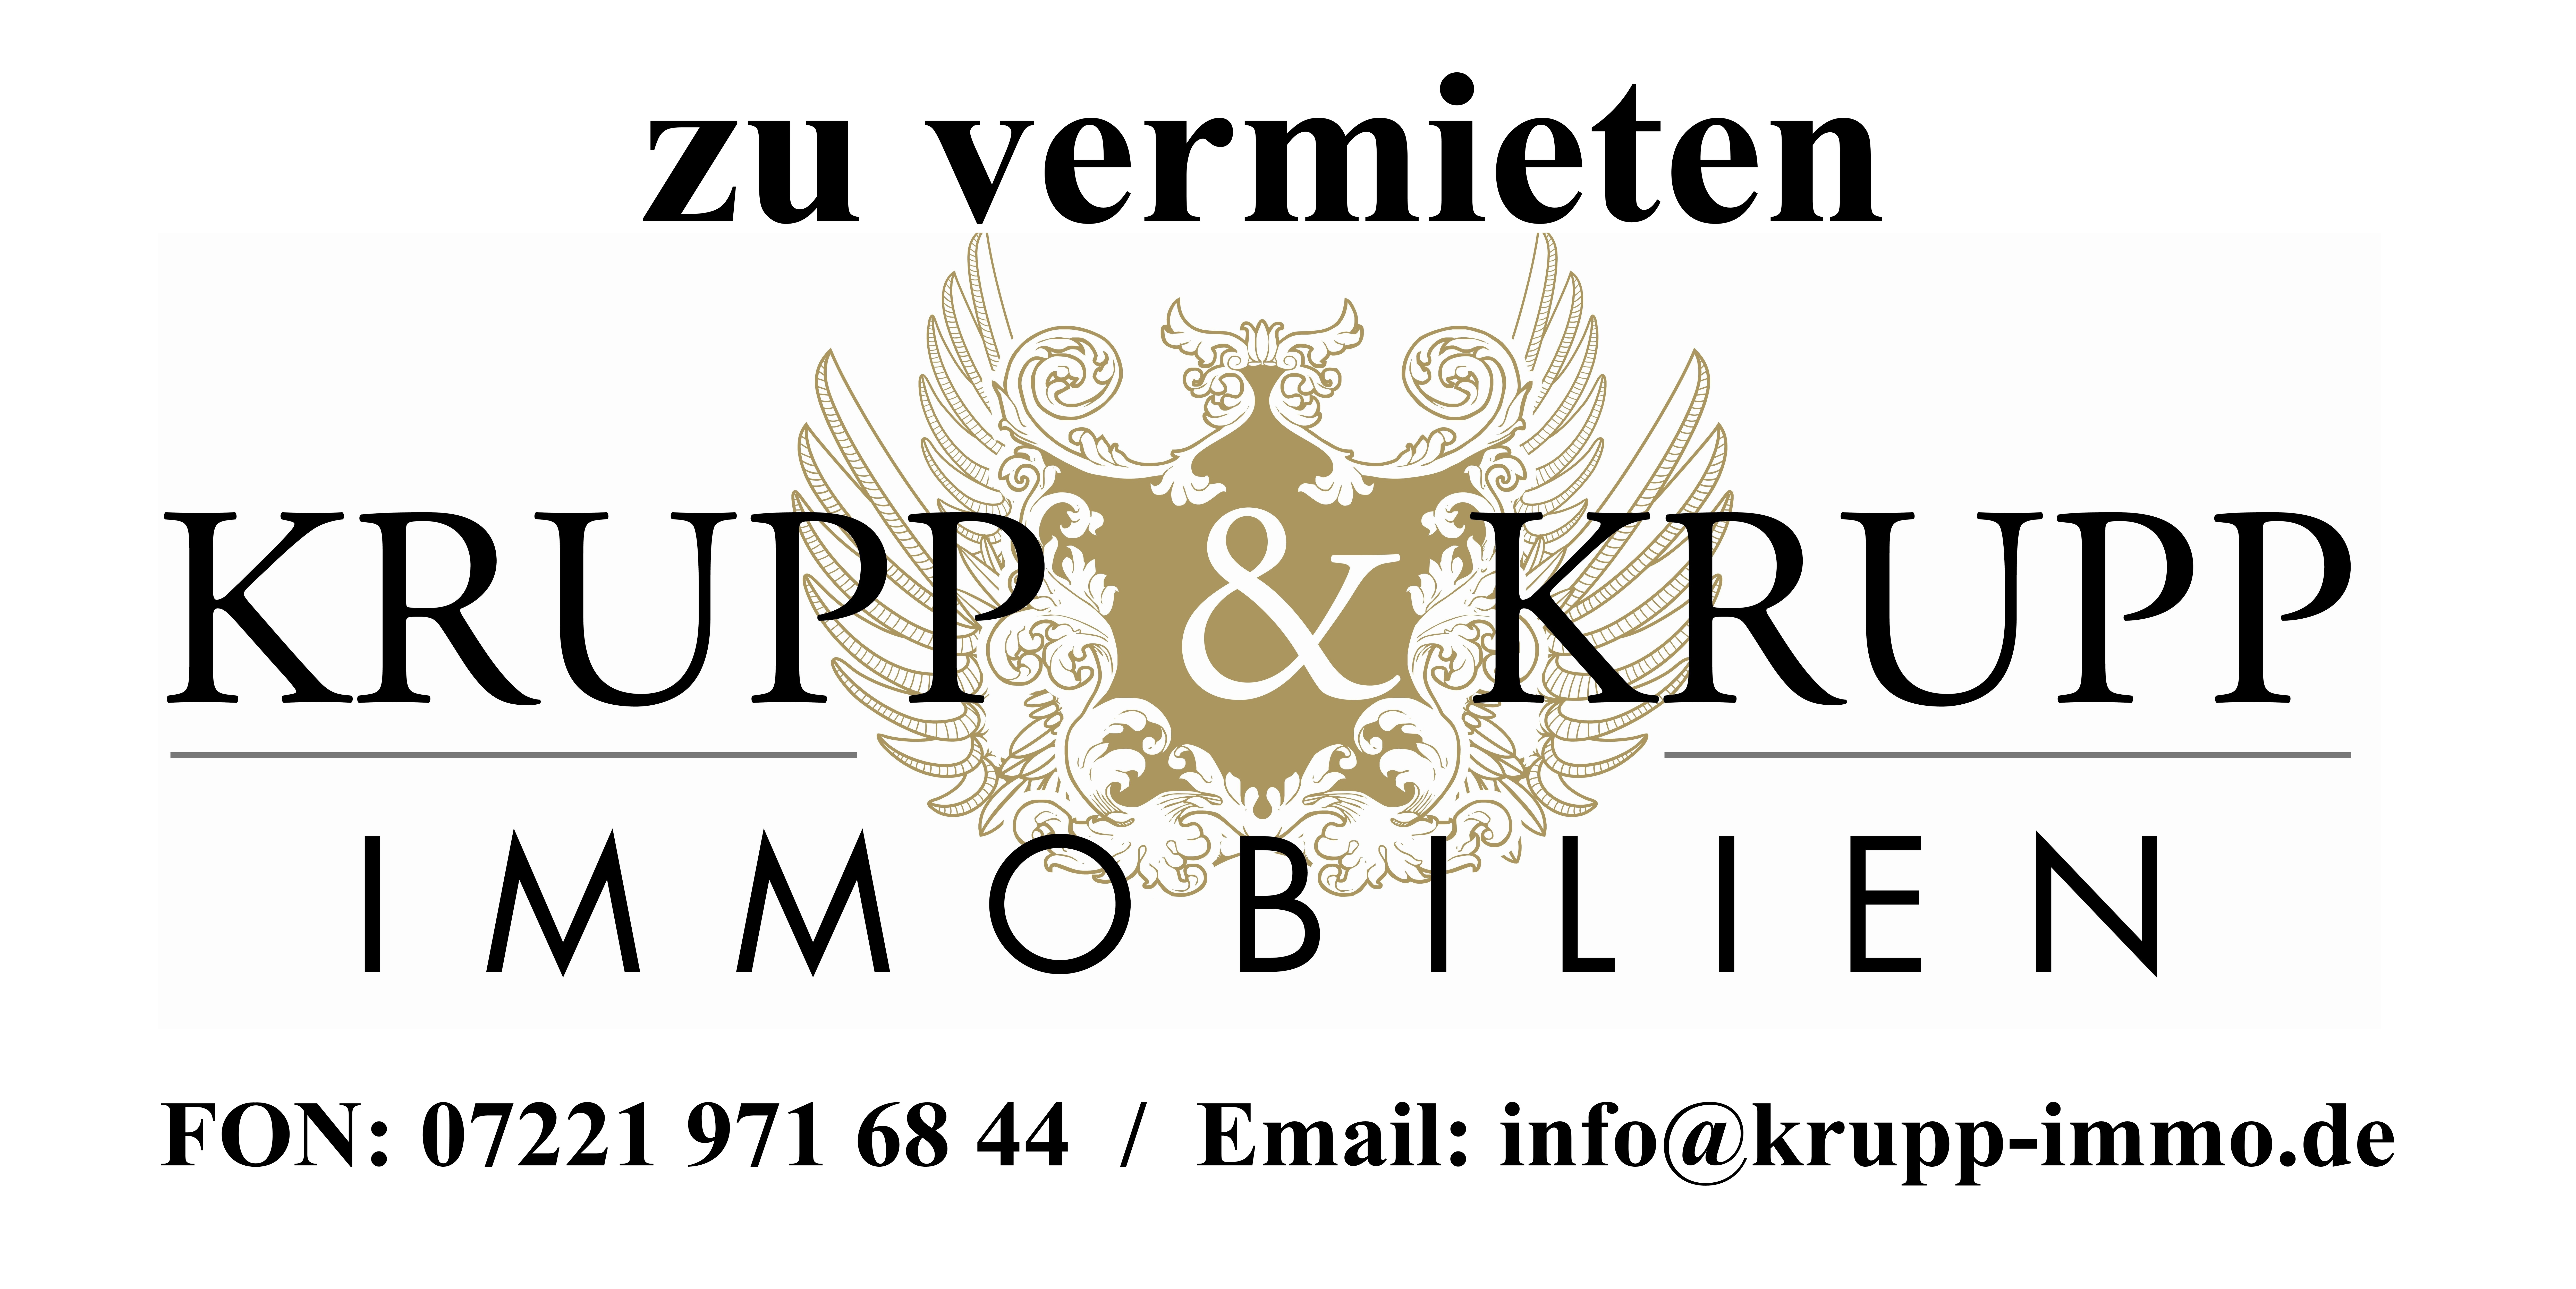 Krupp & Krupp Immobilien Telefon: 07221 9716844 
Email: info@krupp-immo.de